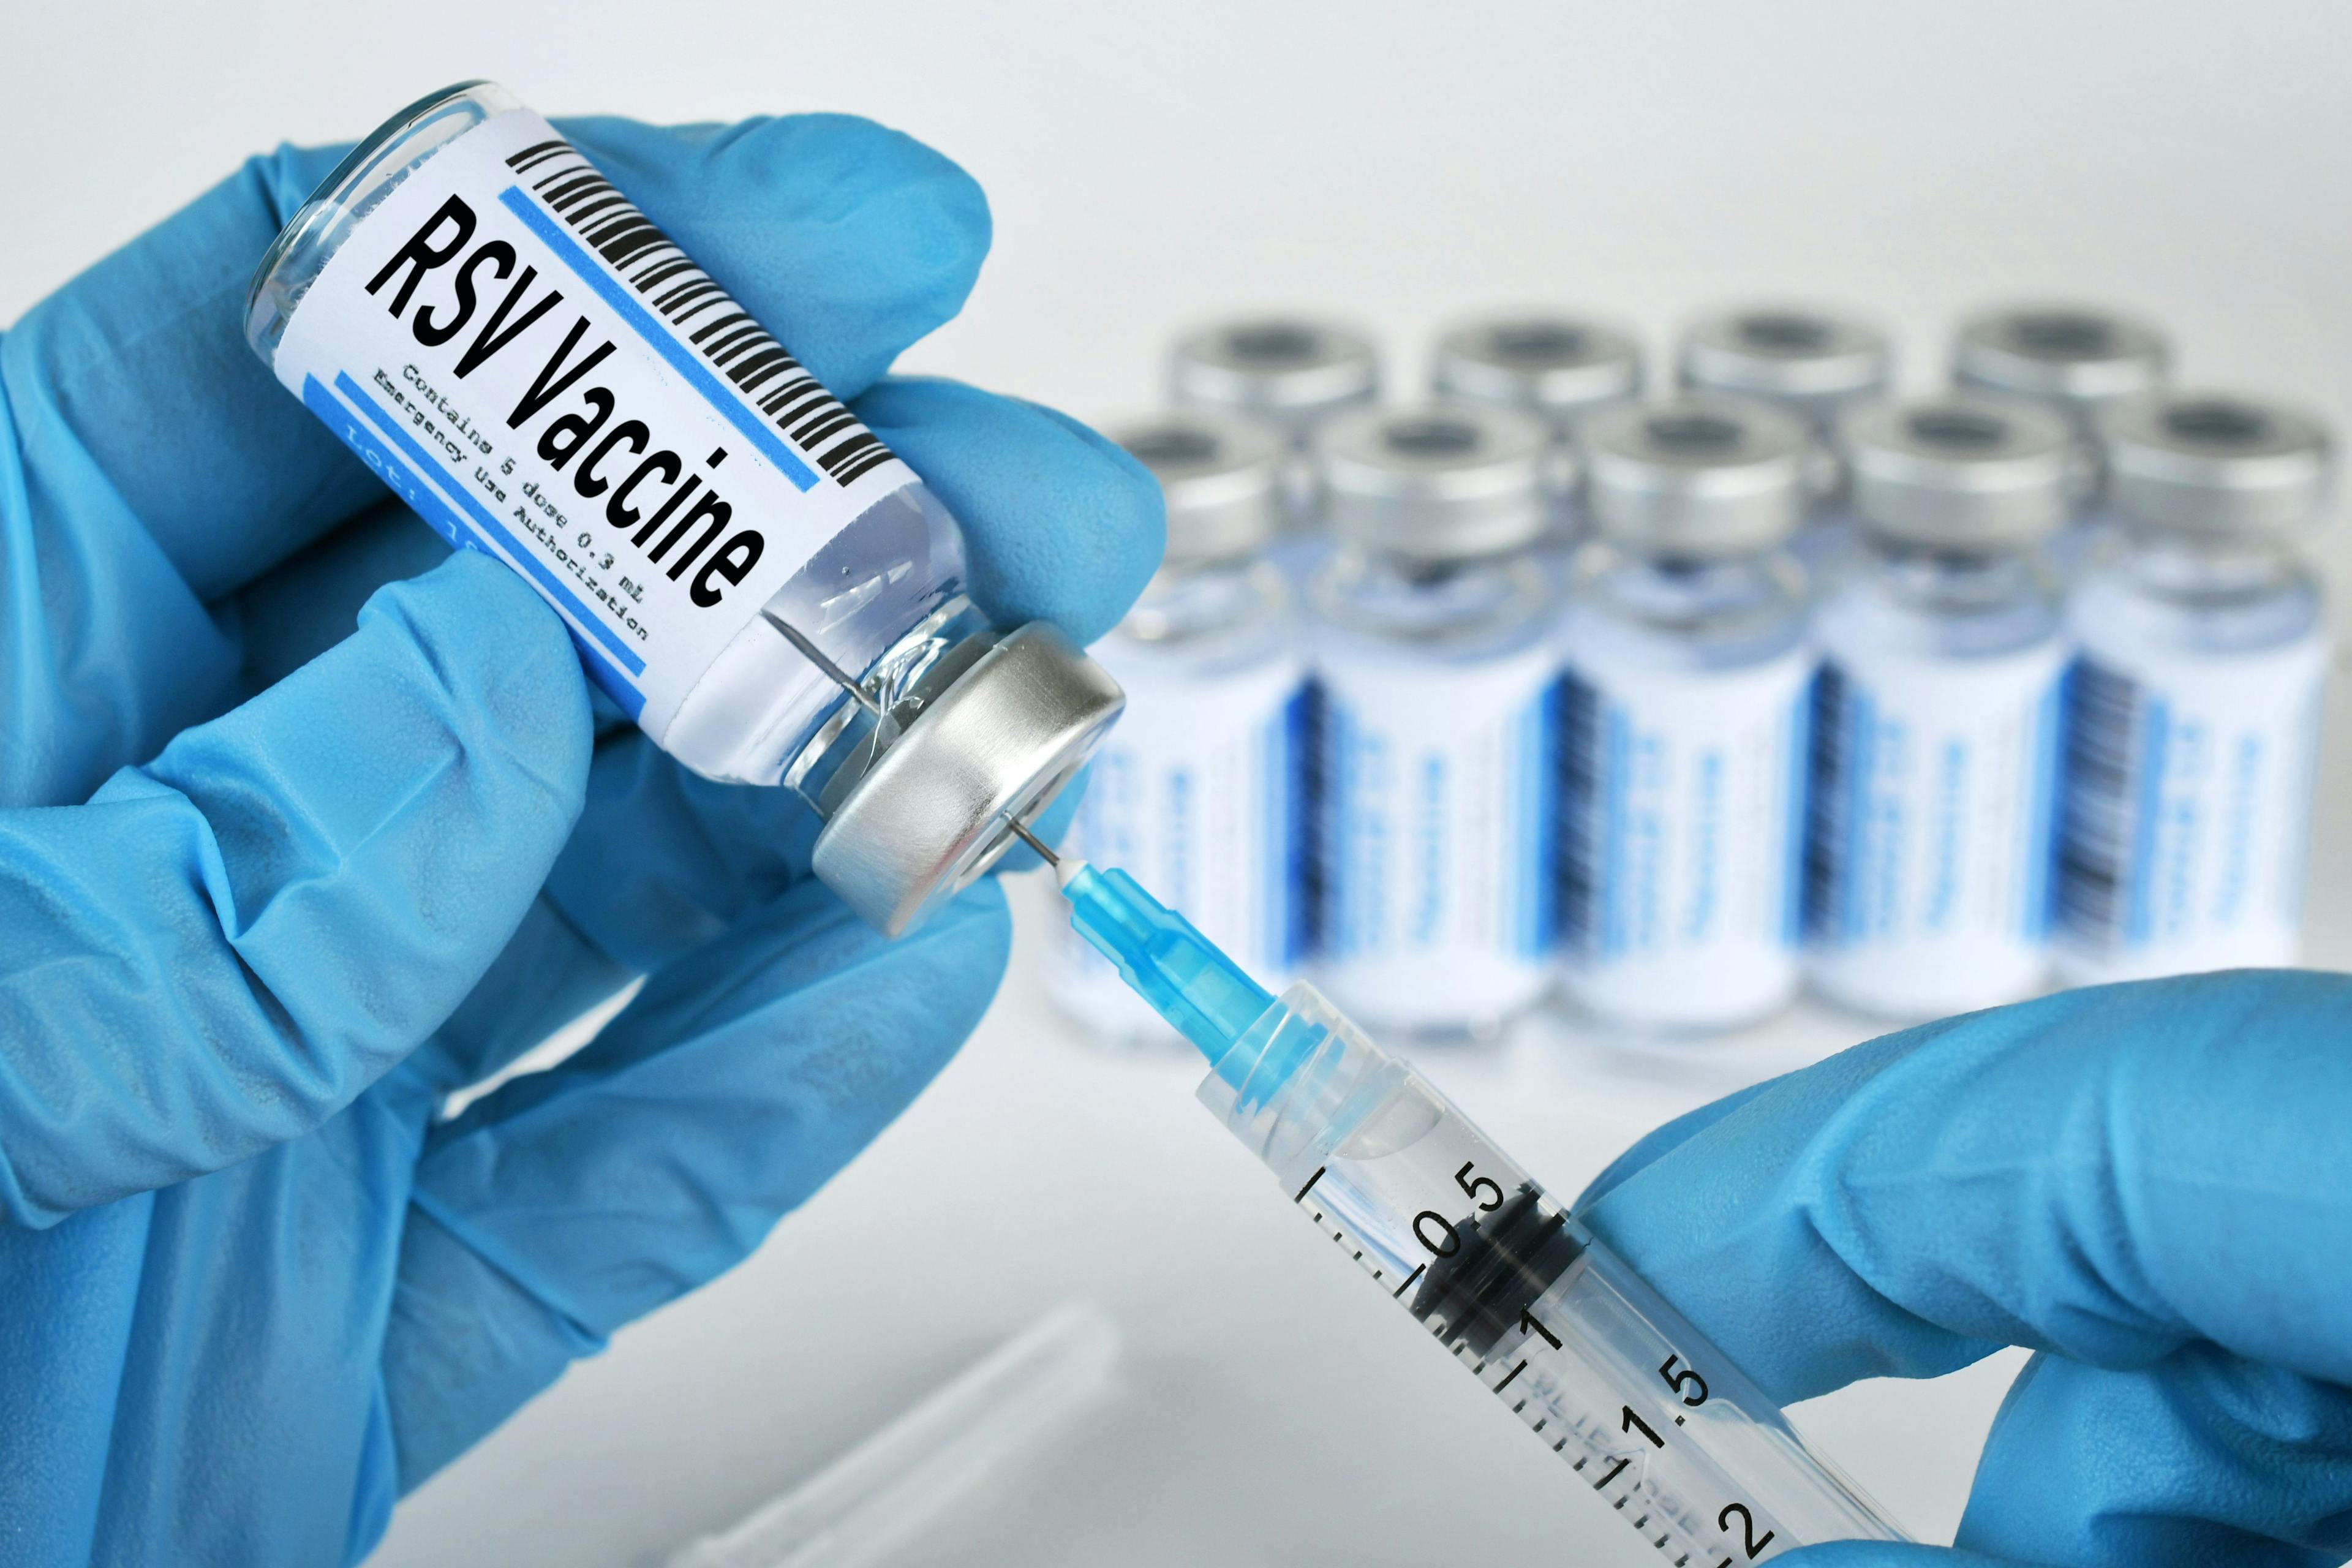 RSV vaccine vial with syringe - Respiratory syncytial virus shot | MargJohnsonVA - stock.adobe.com